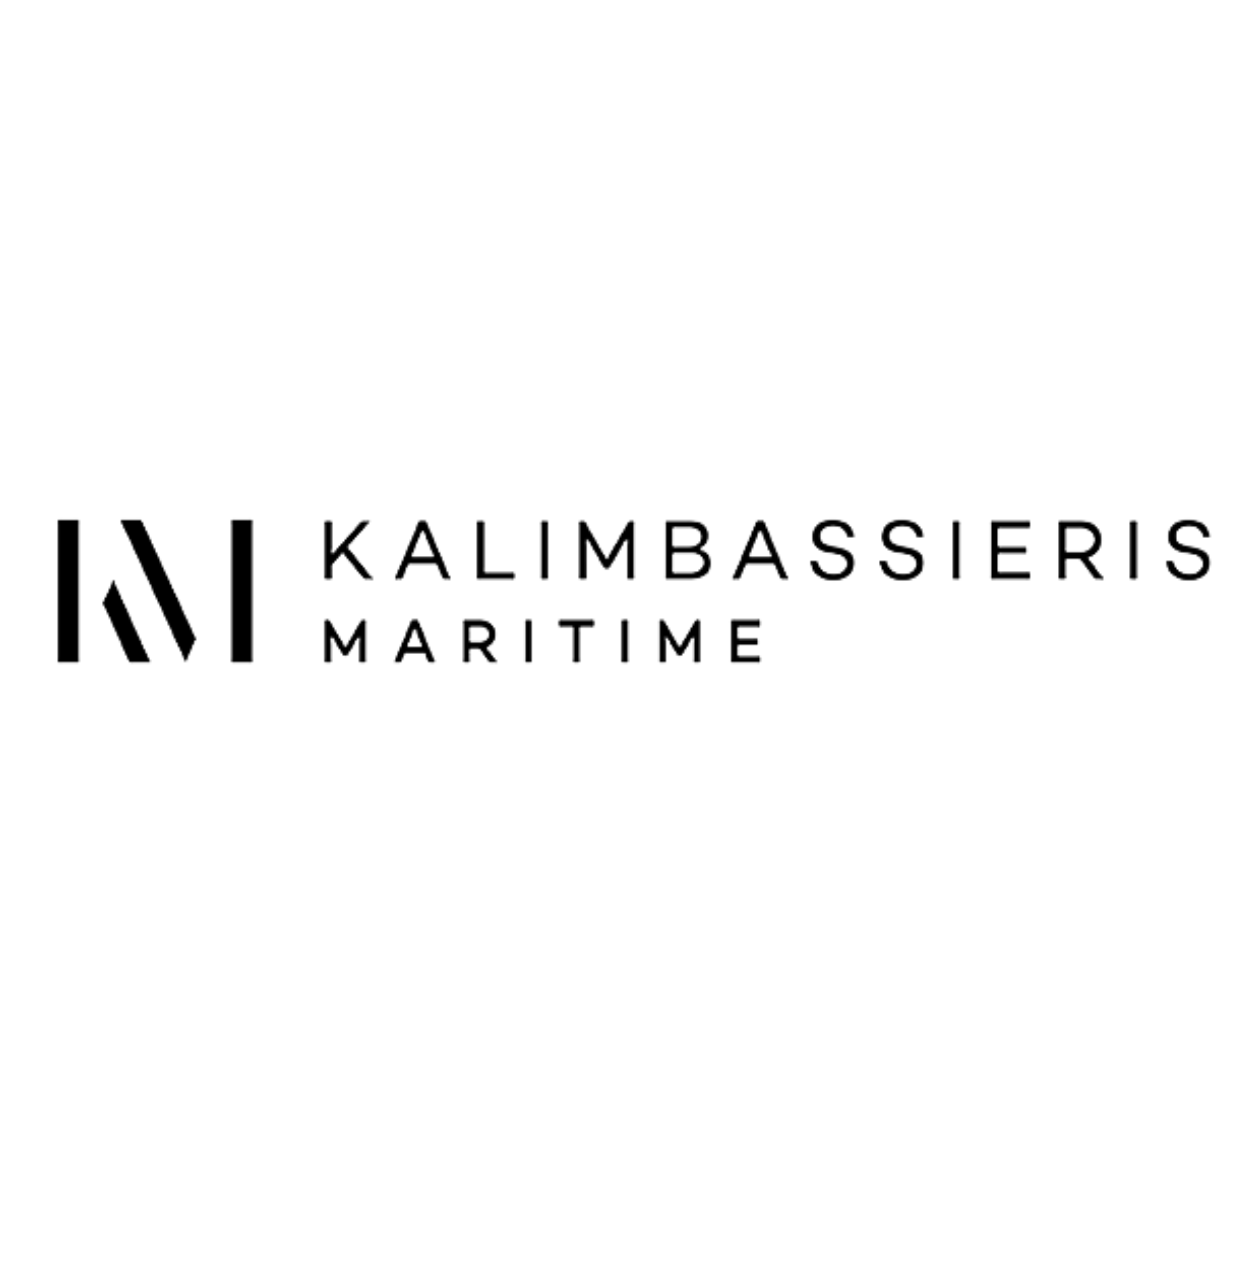 Kalimbassieris Maritime